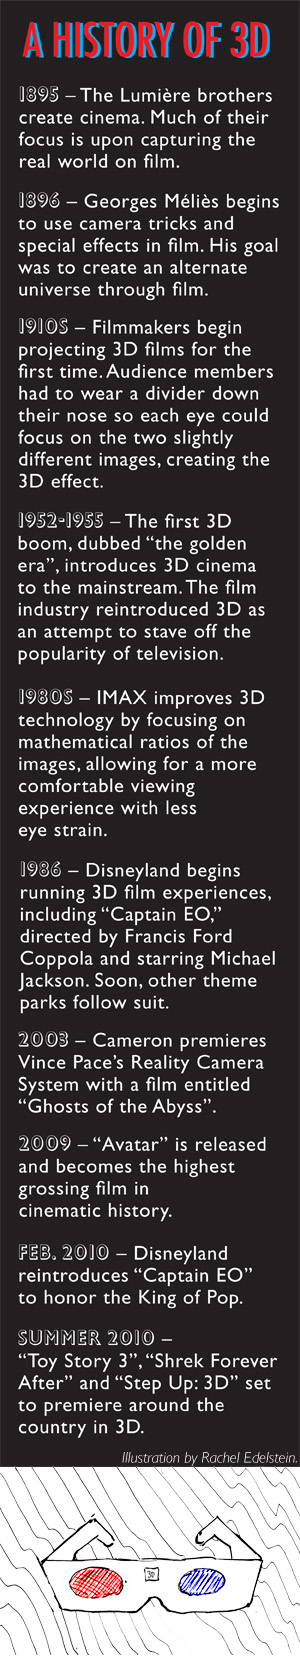 History of 3D Timeline